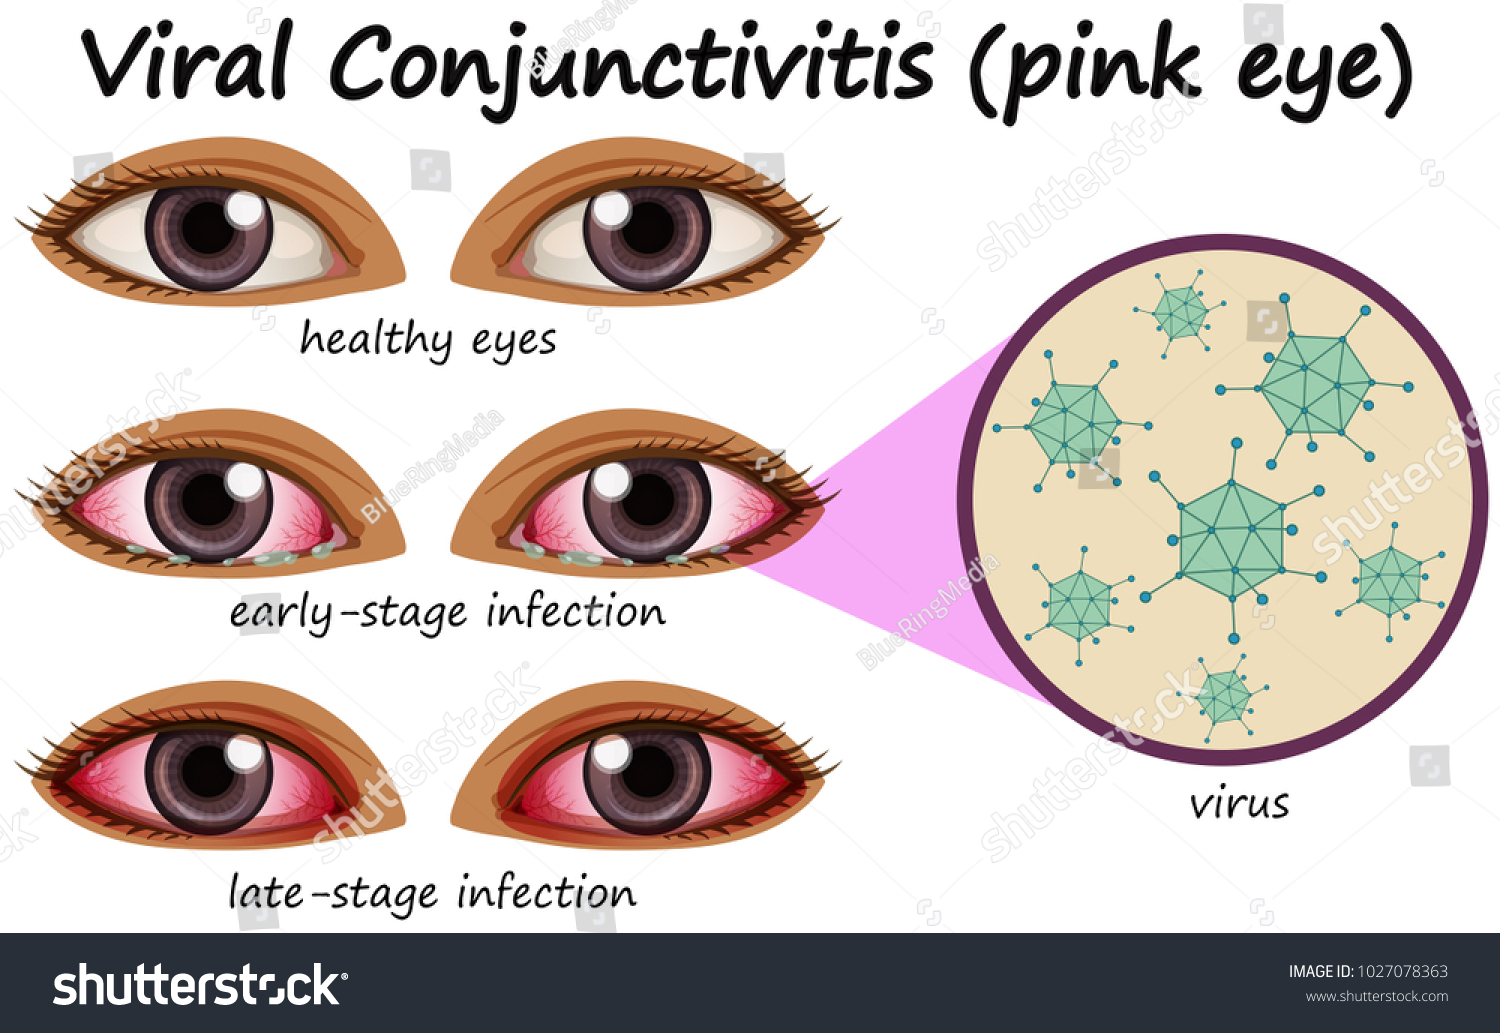 Human Eye Disease With Viral Conjunctivitis Illustration My XXX Hot Girl